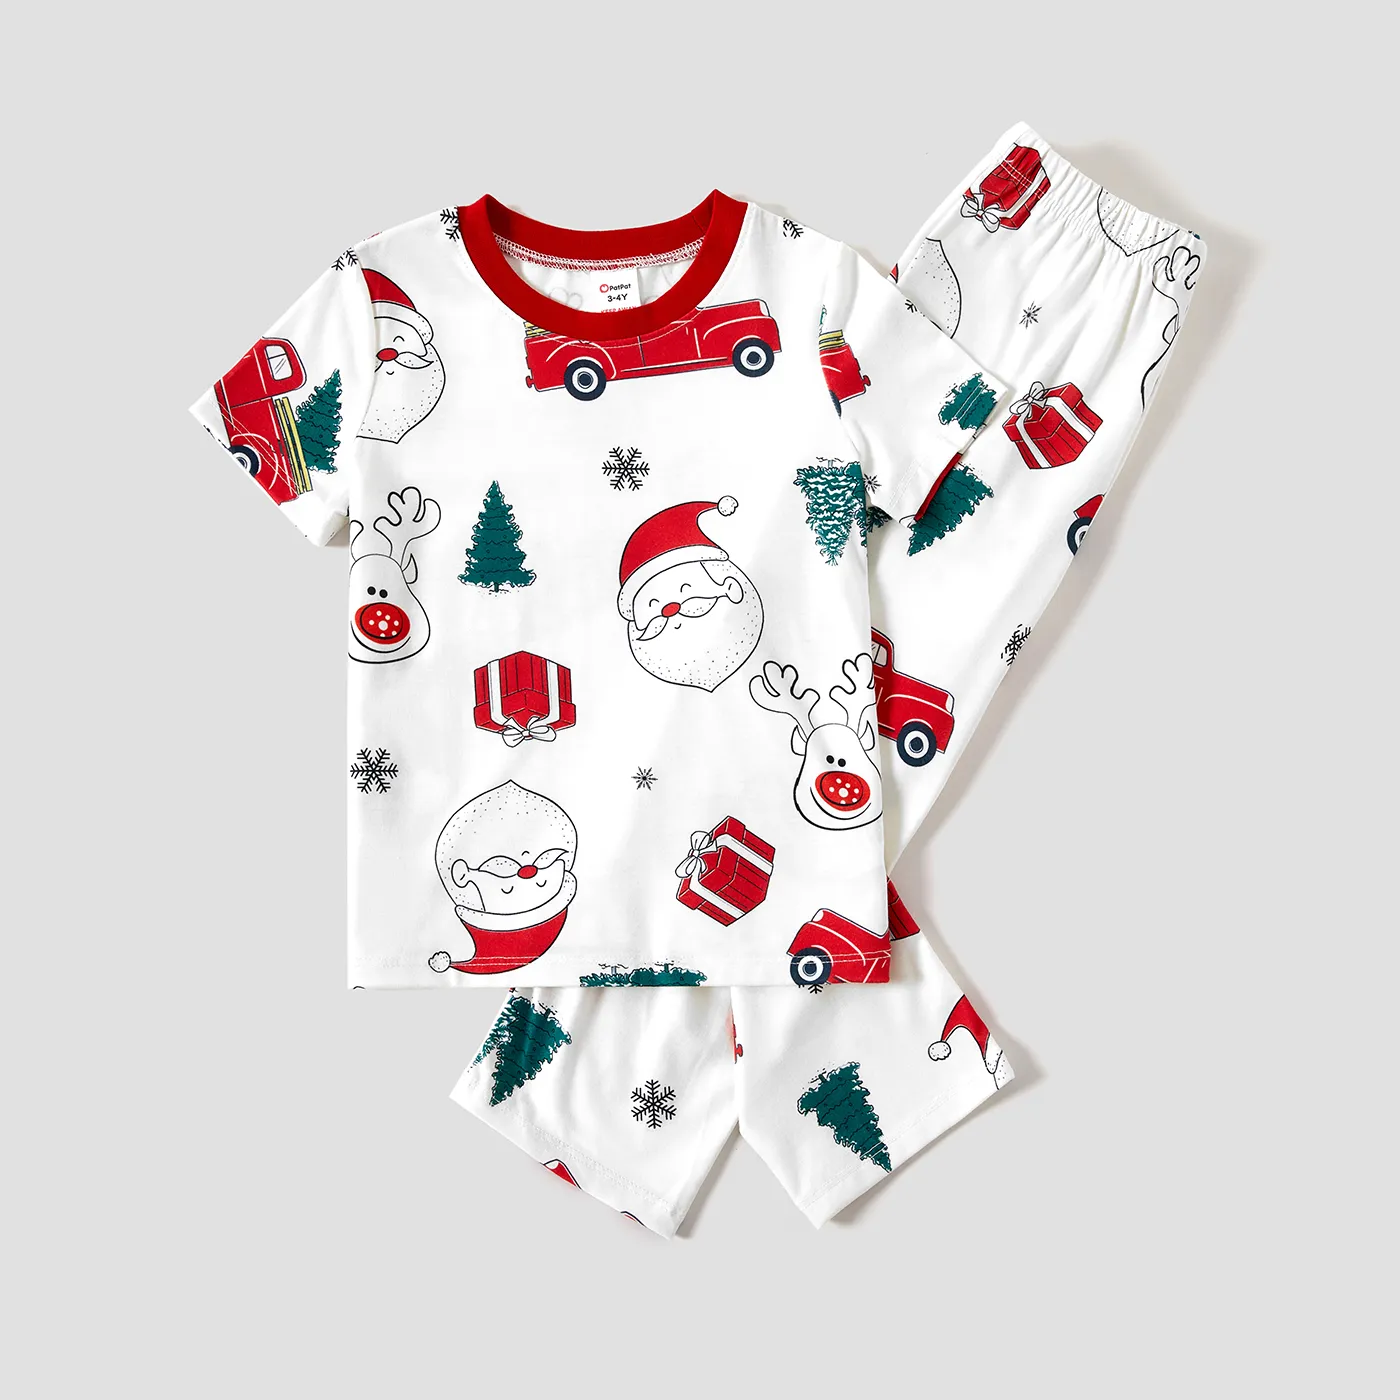 Christmas Trunk and Santa Print Family Matching Pajamas Sets (Flame Resistant)